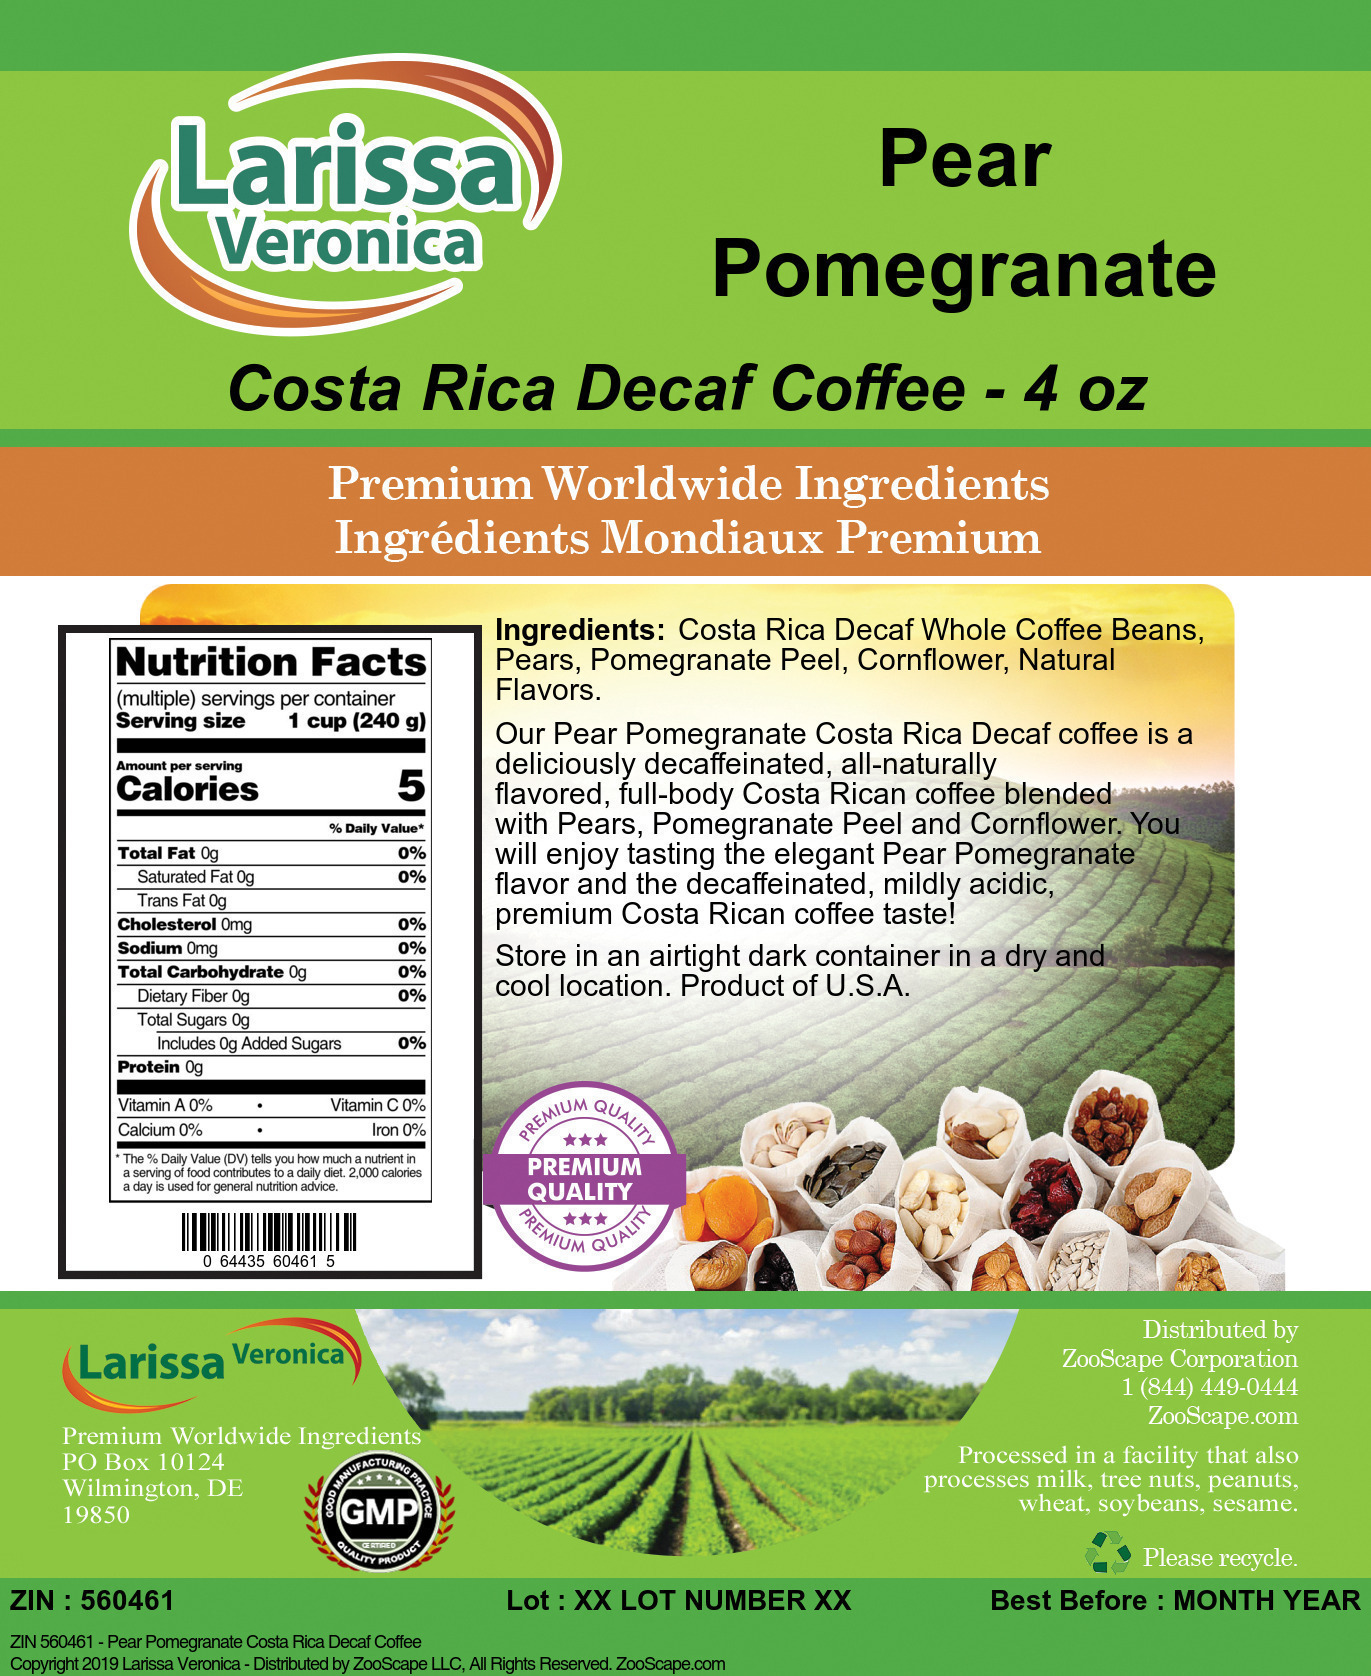 Pear Pomegranate Costa Rica Decaf Coffee - Label